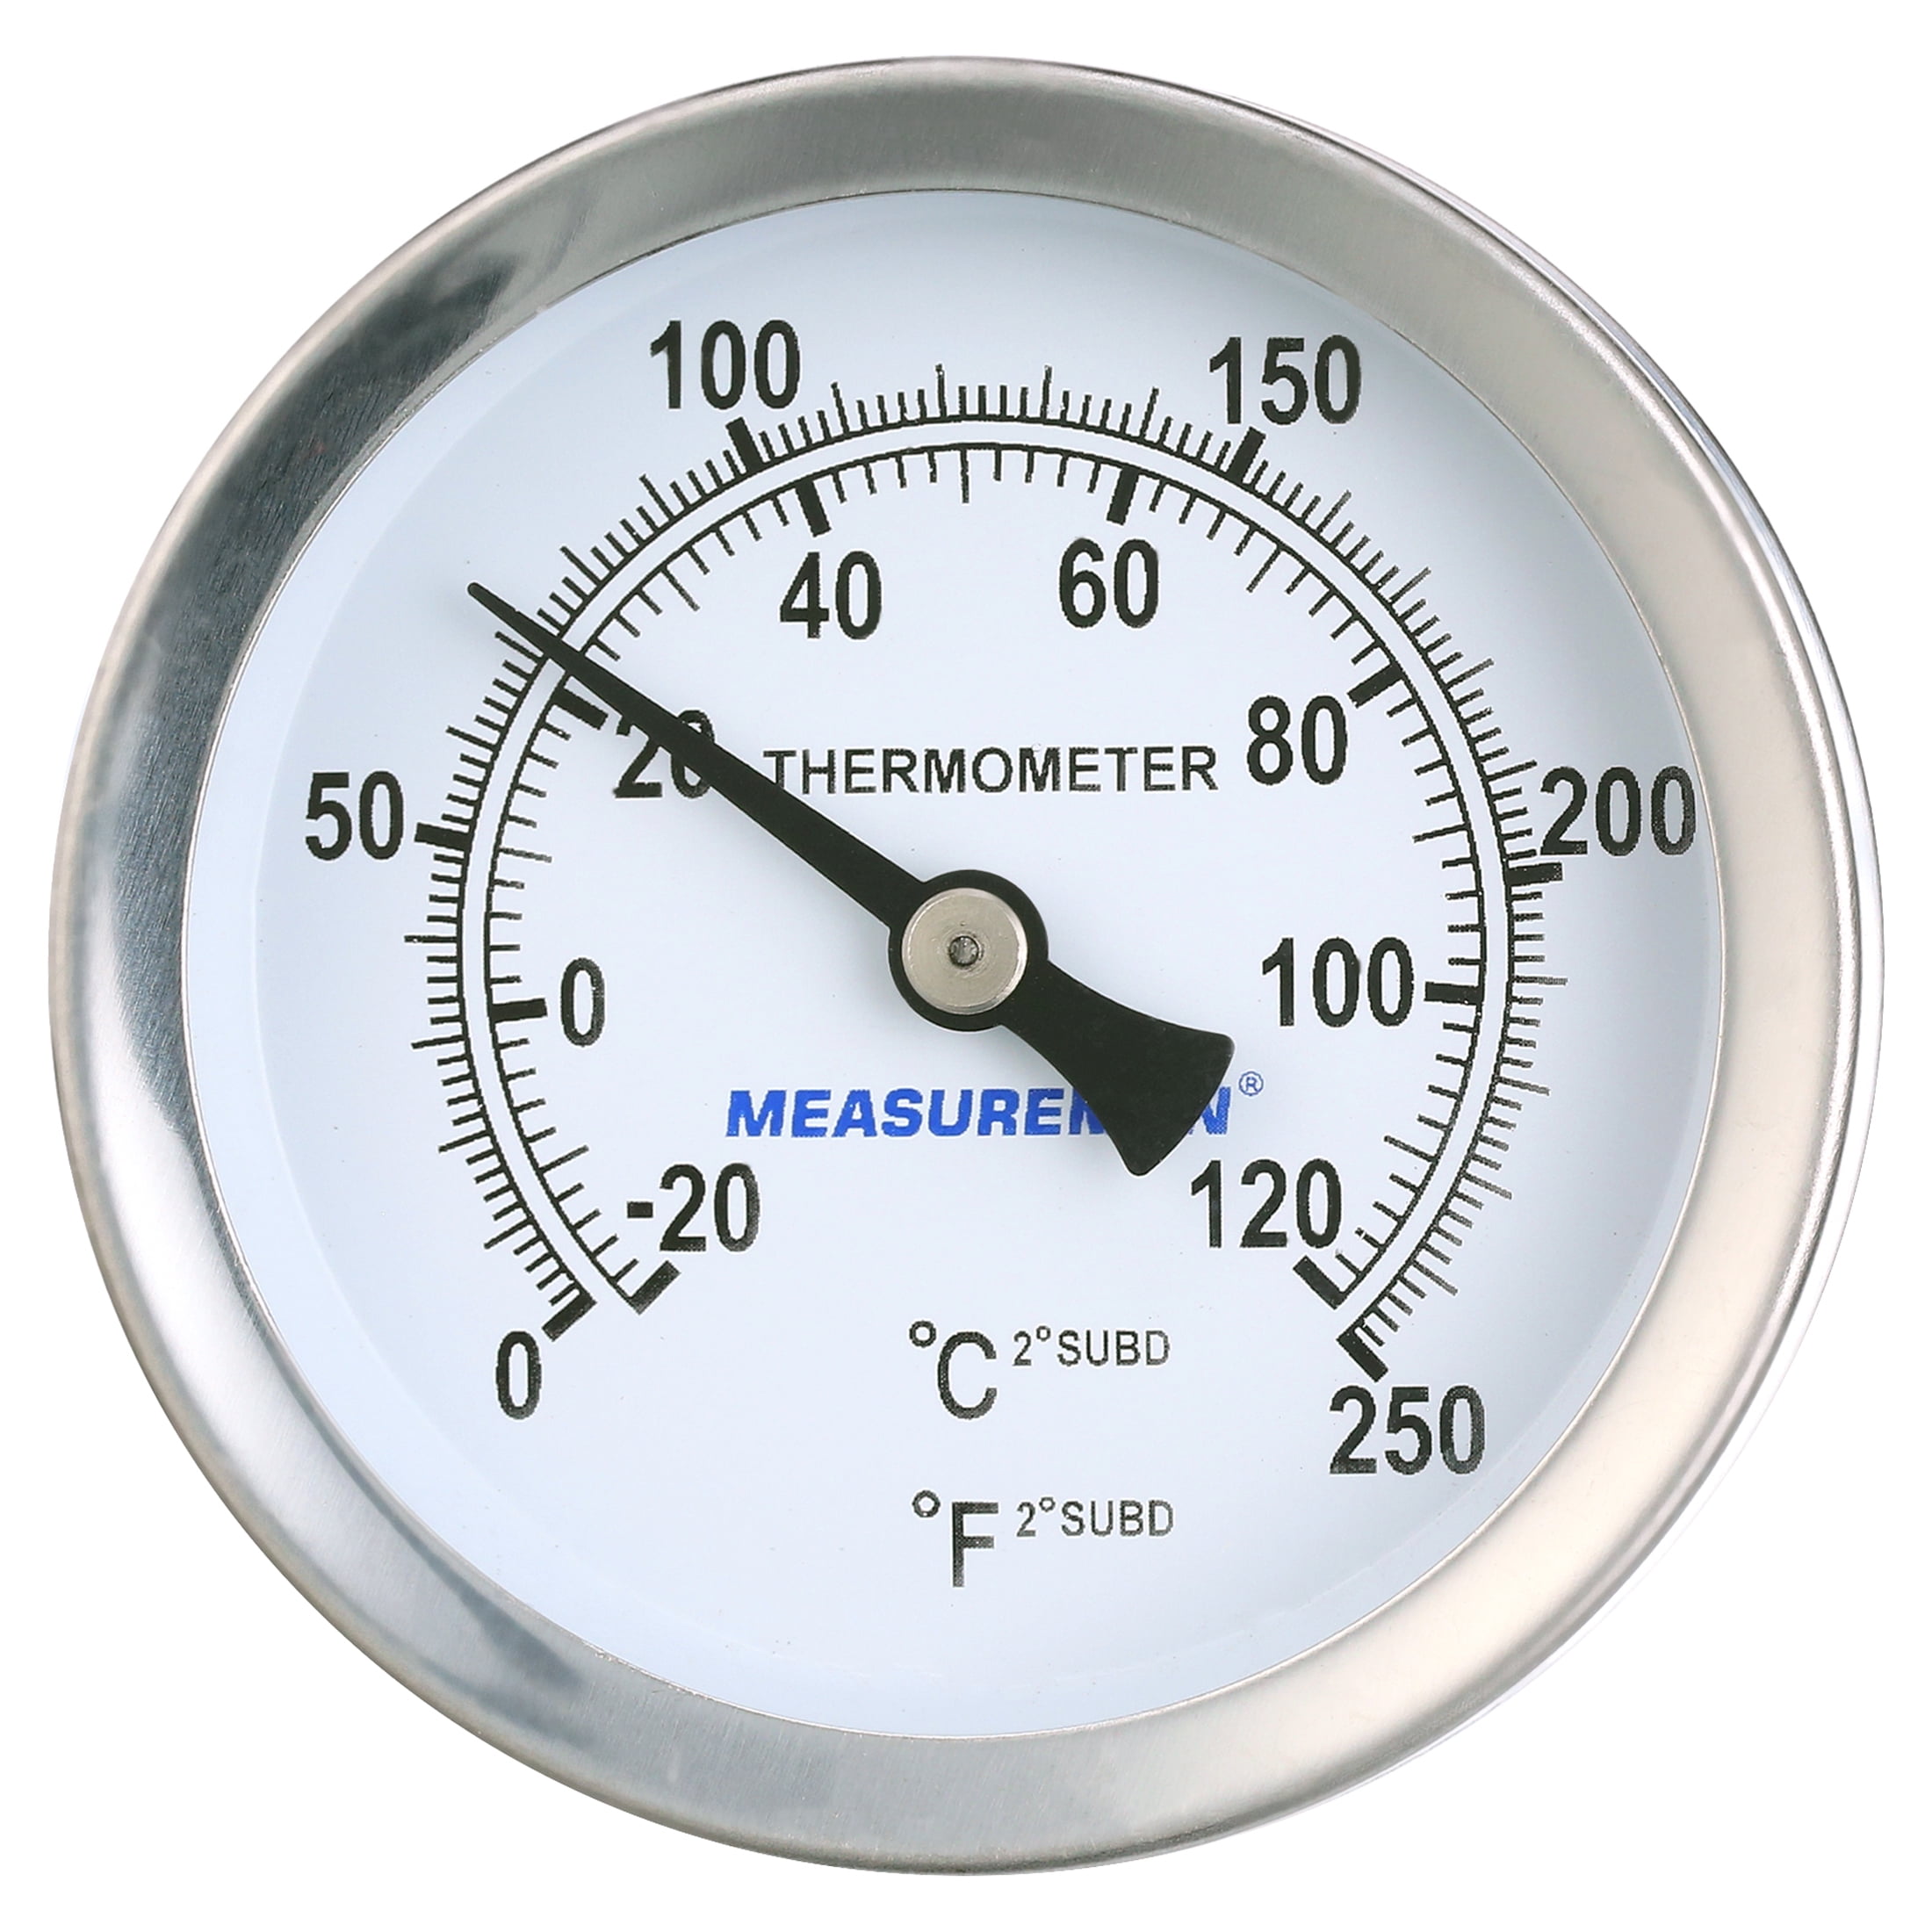 MEASUREMAN Hot Water Bi-Metal Thermometer, 2-12 Dial, 1-34 Lead-Free Brass Stem, Range 0-250 Deg F-20-120 Deg C, 2% Accuracy, Ad